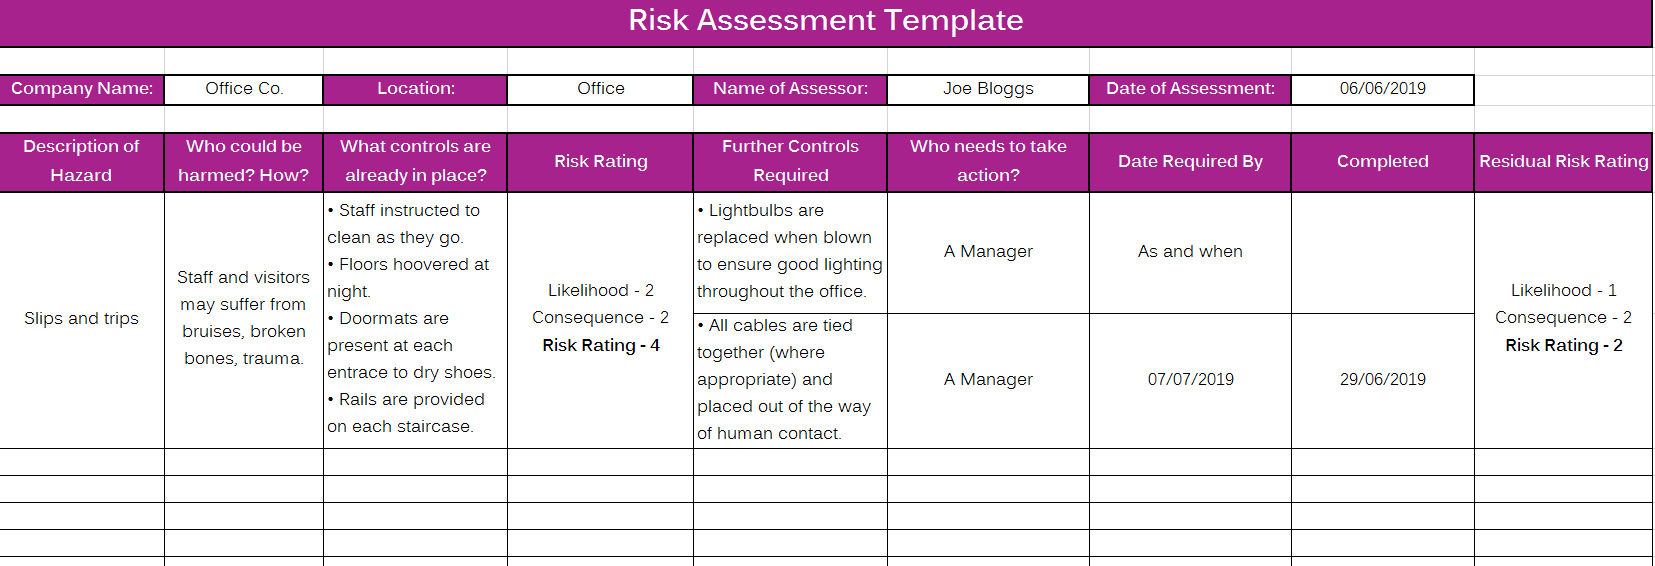 Credit Risk Assessment Template : Risk Assessment Template (With images) | Assessment ...